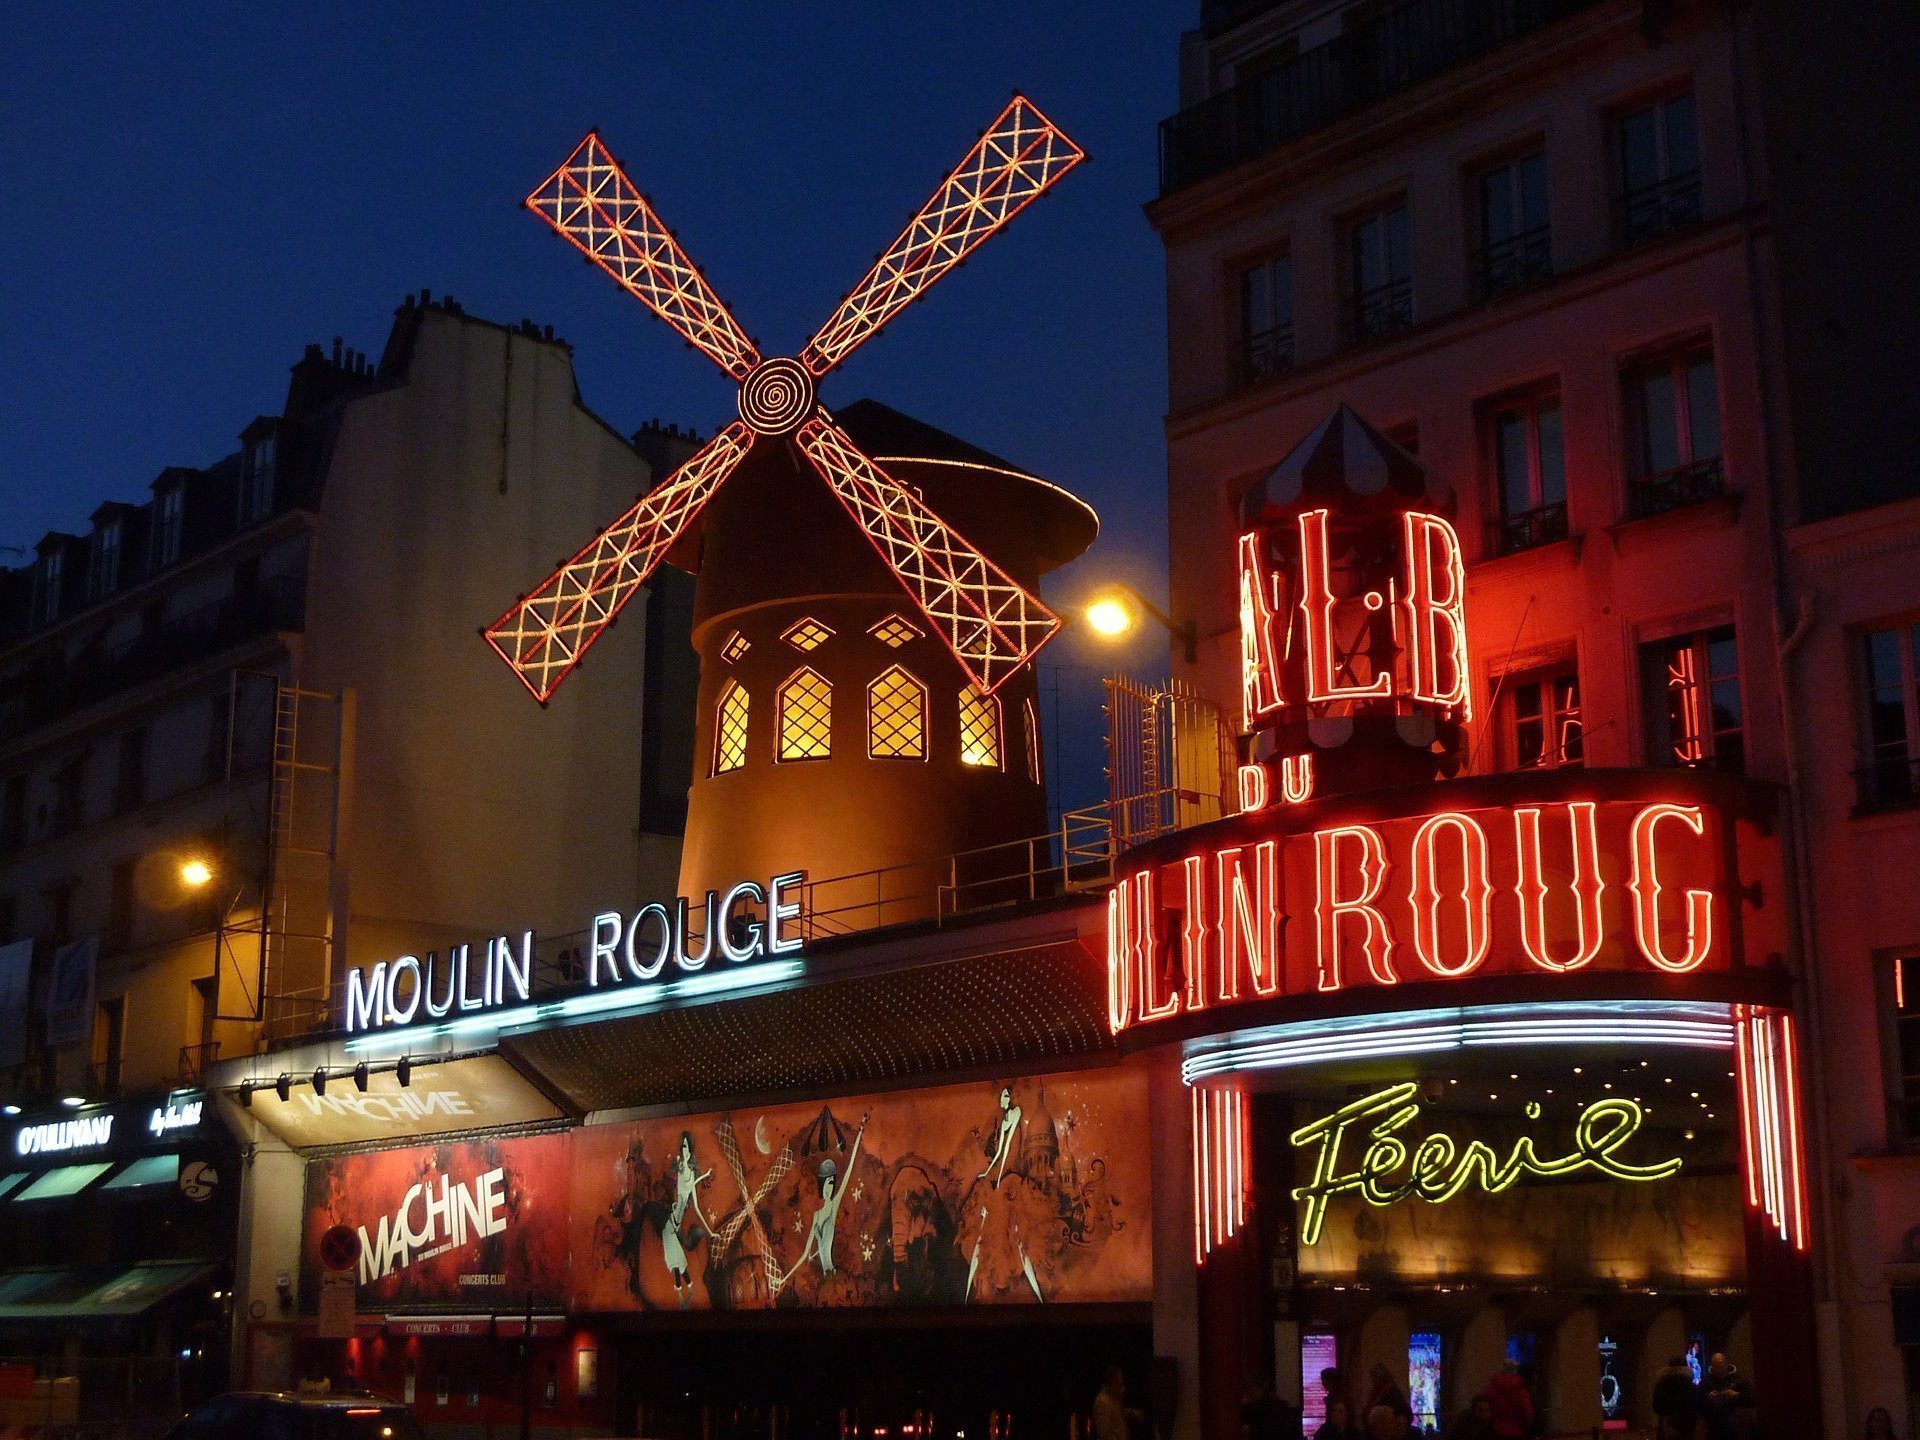 Paris bucket list - Moulin Rouge at night